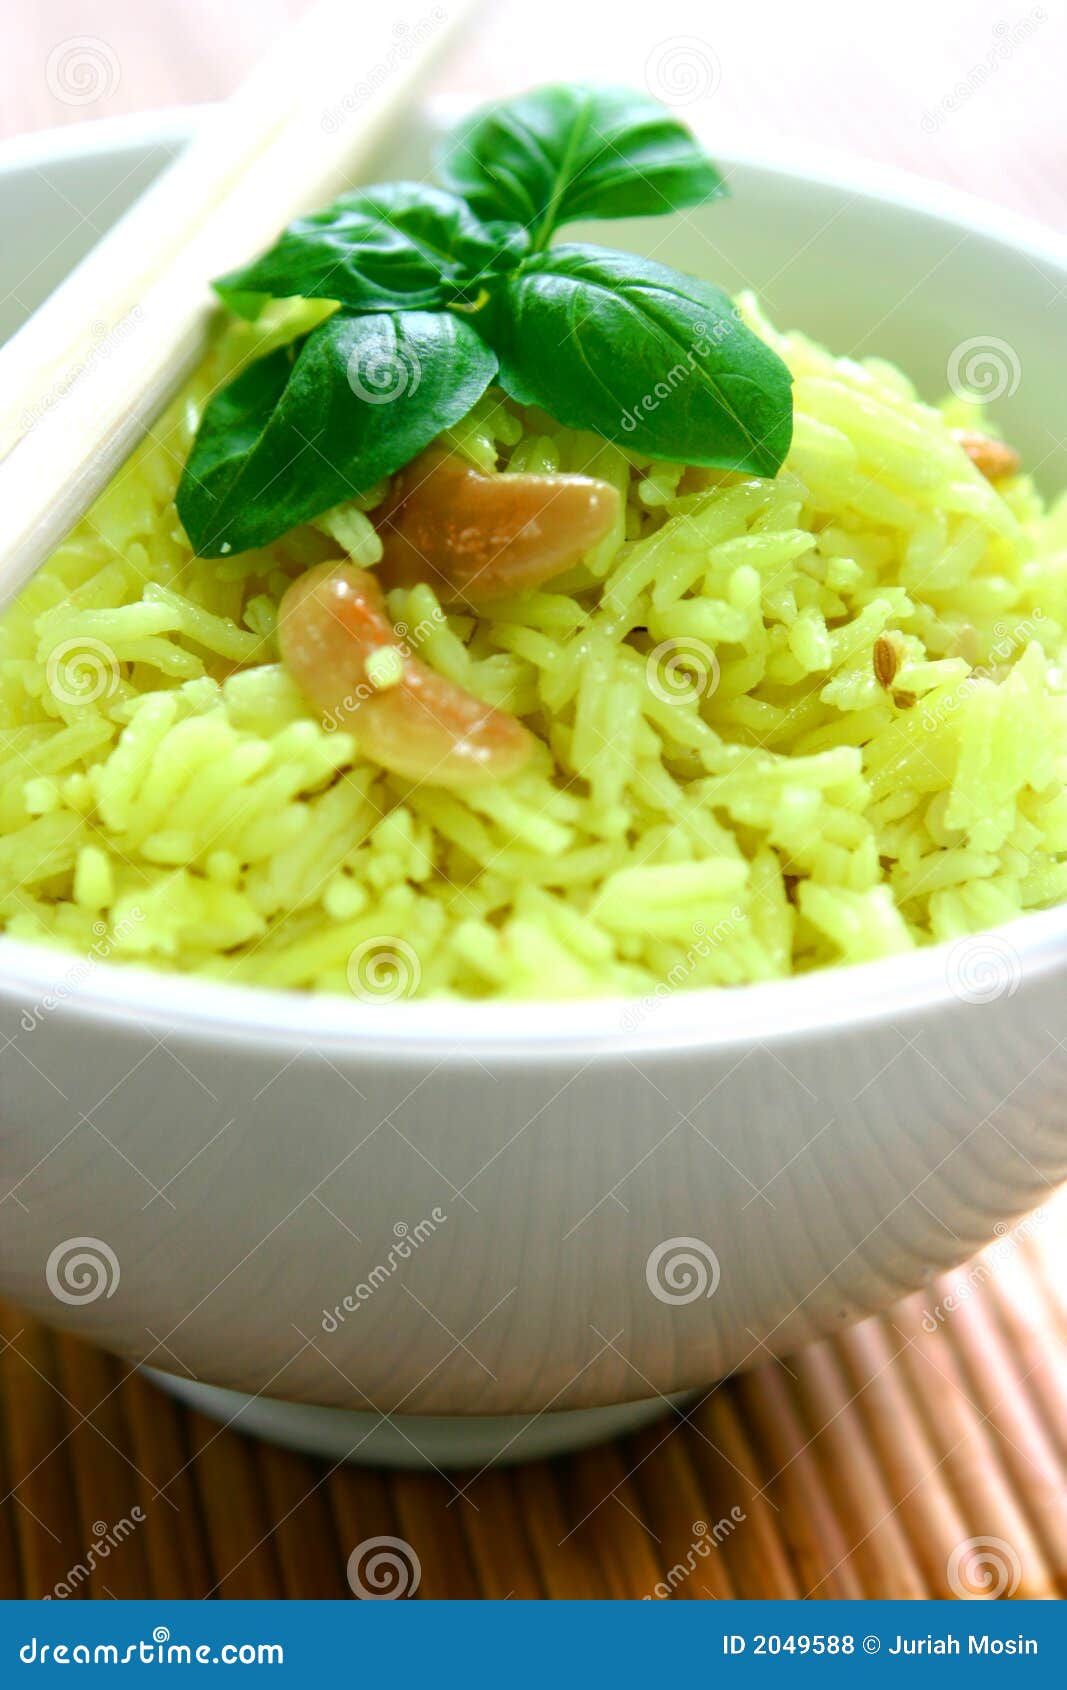 a bowl of lemon flavoured fragrant rice